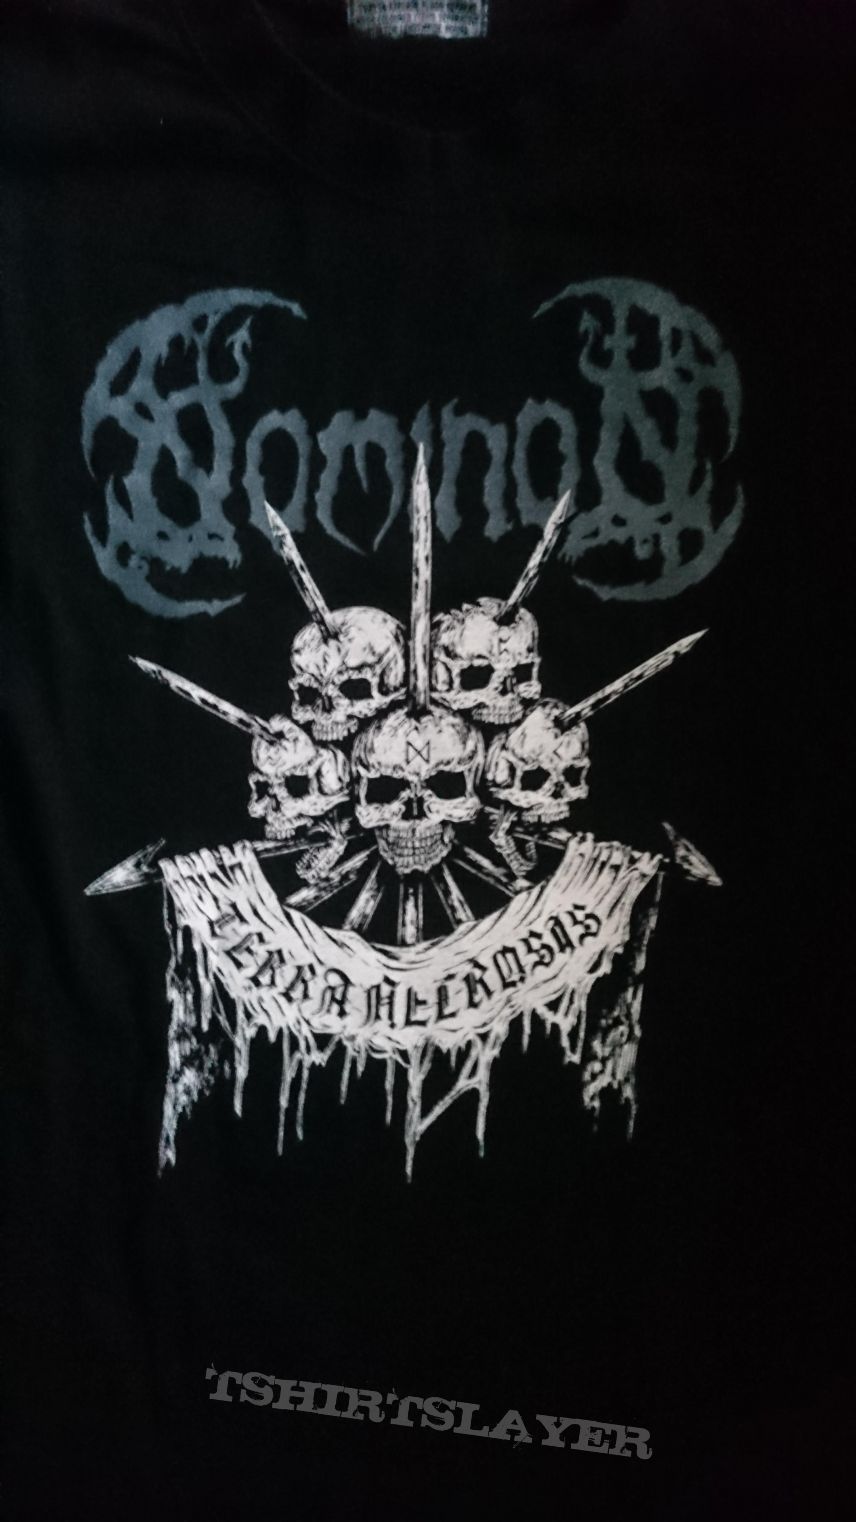 Nominon - Terra Necrosis T-Shirt